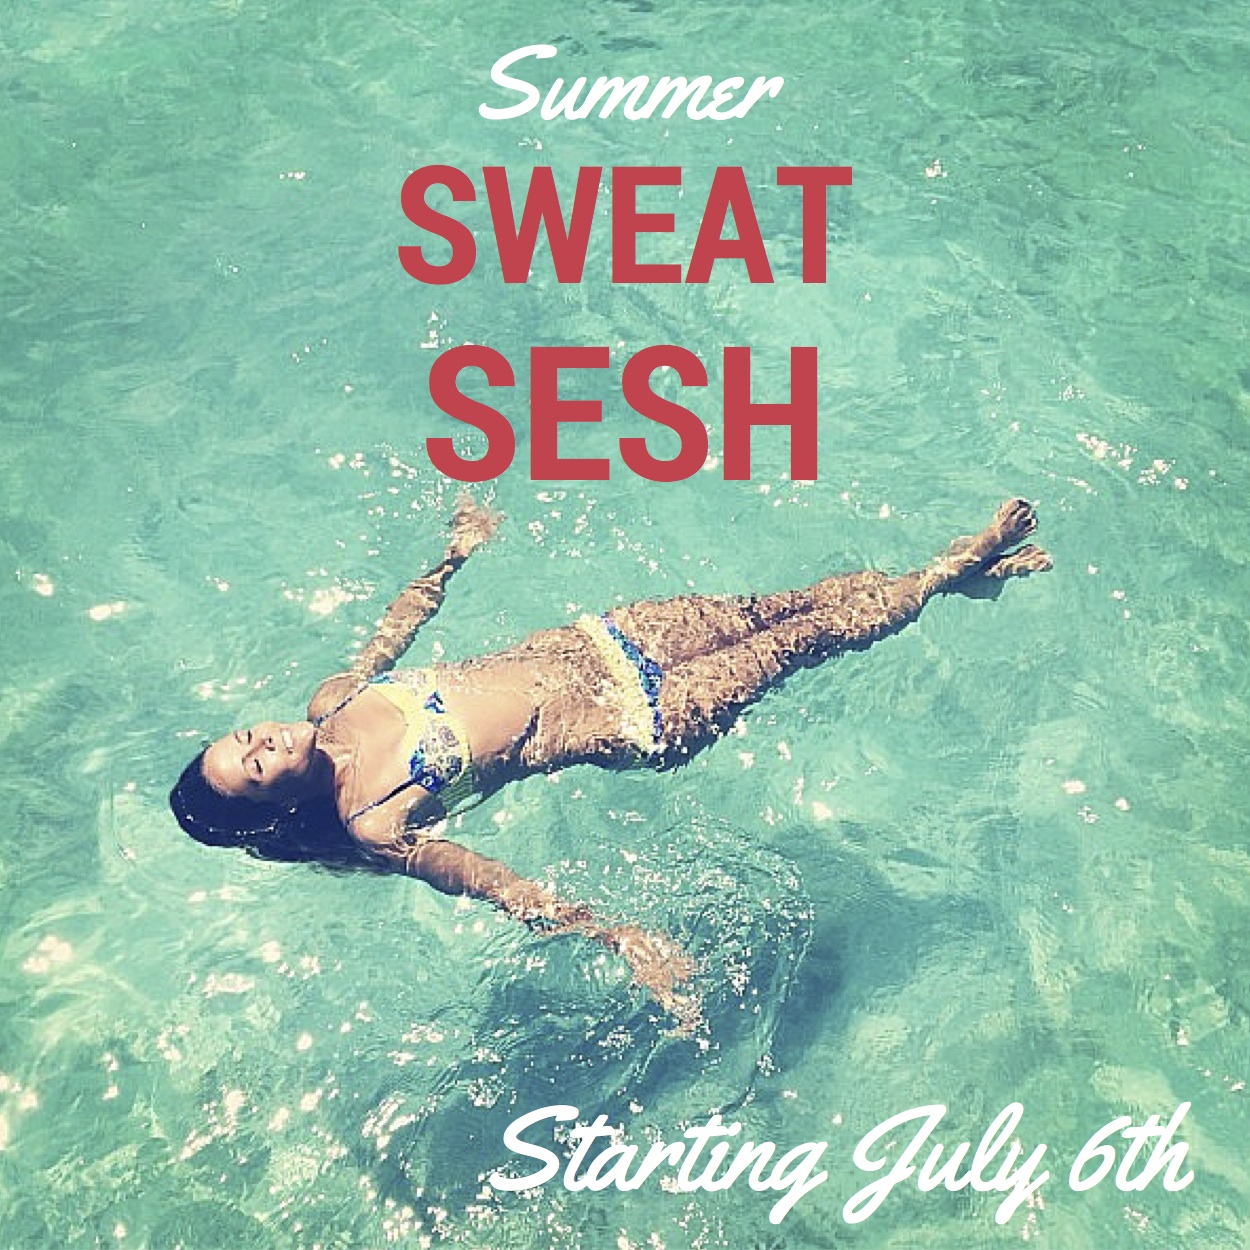 Summer Sweat Sesh Invite